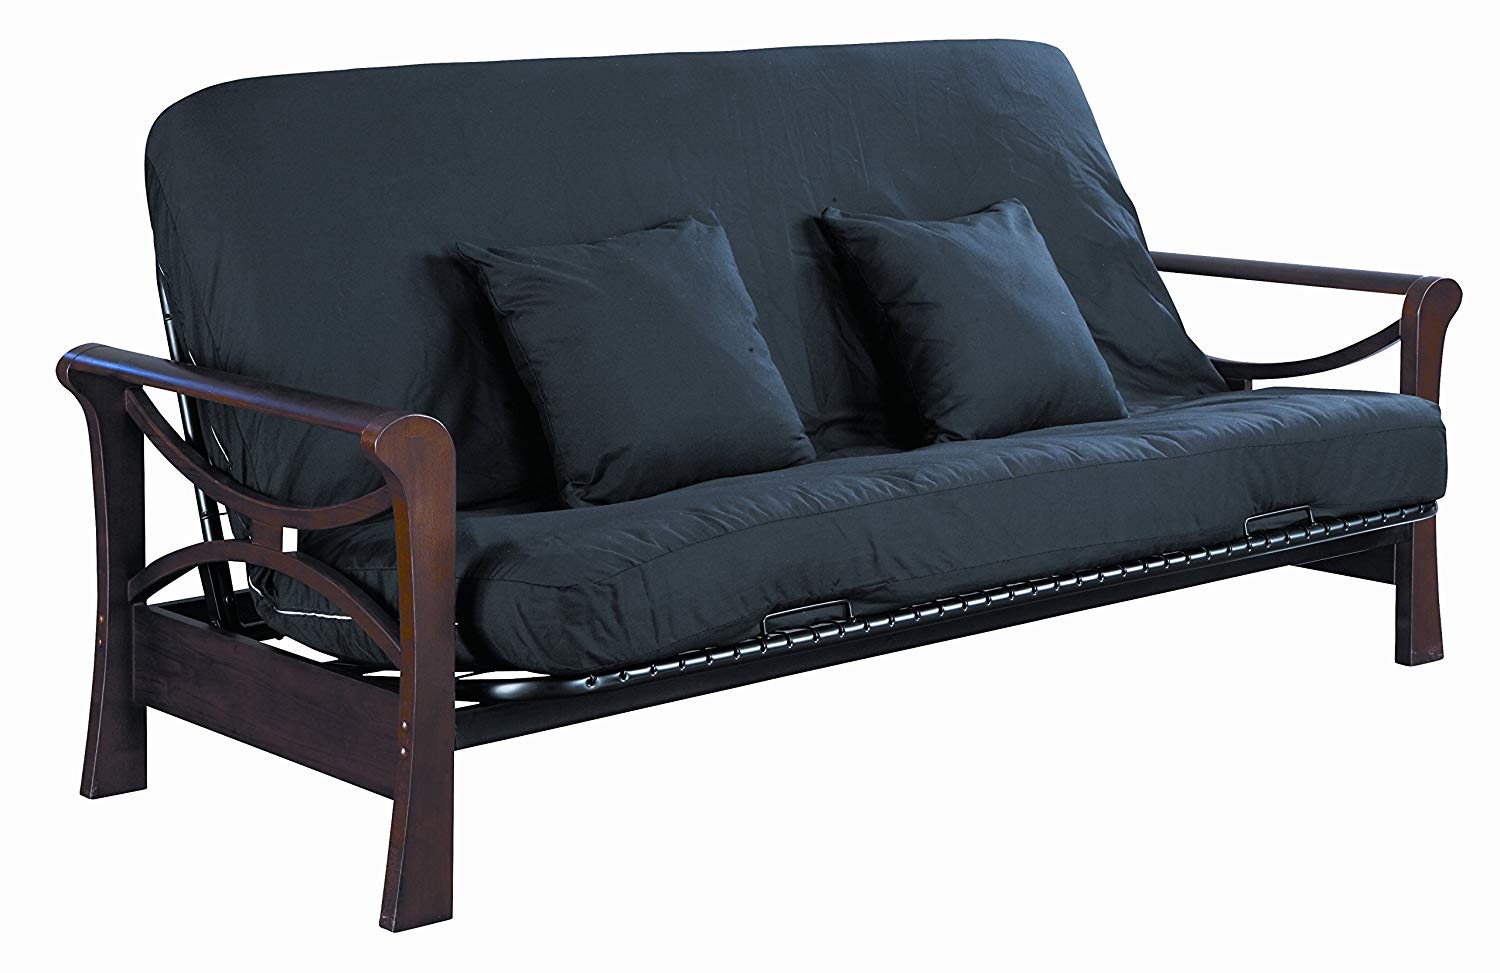 price of futon mattress